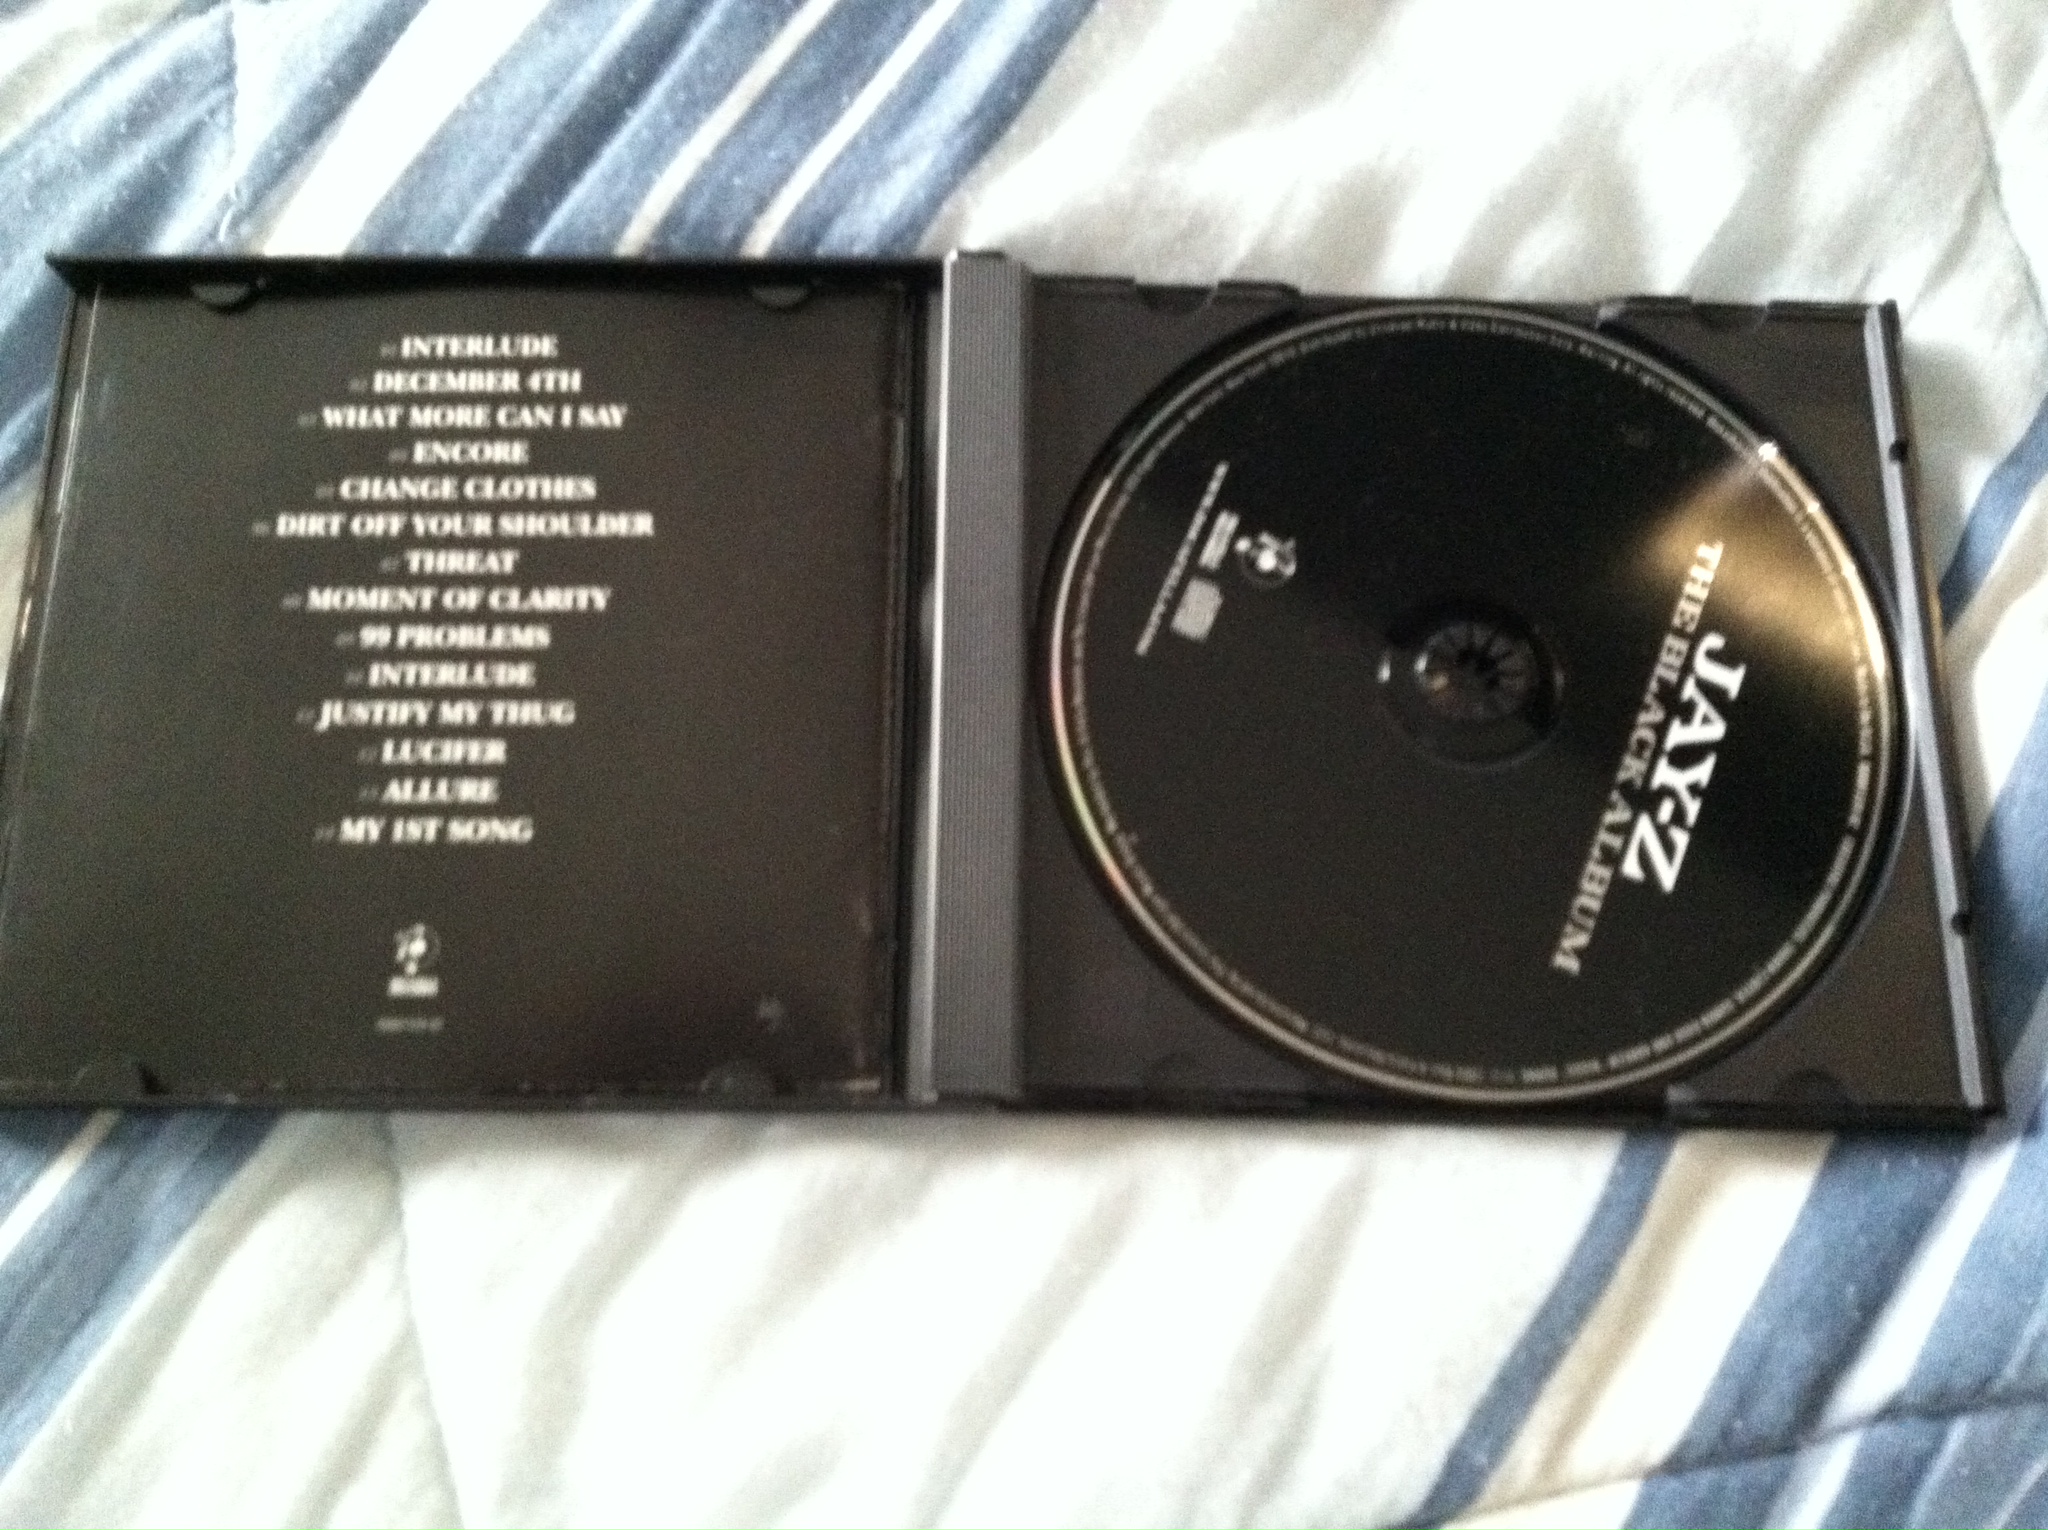 The Black Album - Album by JAY-Z